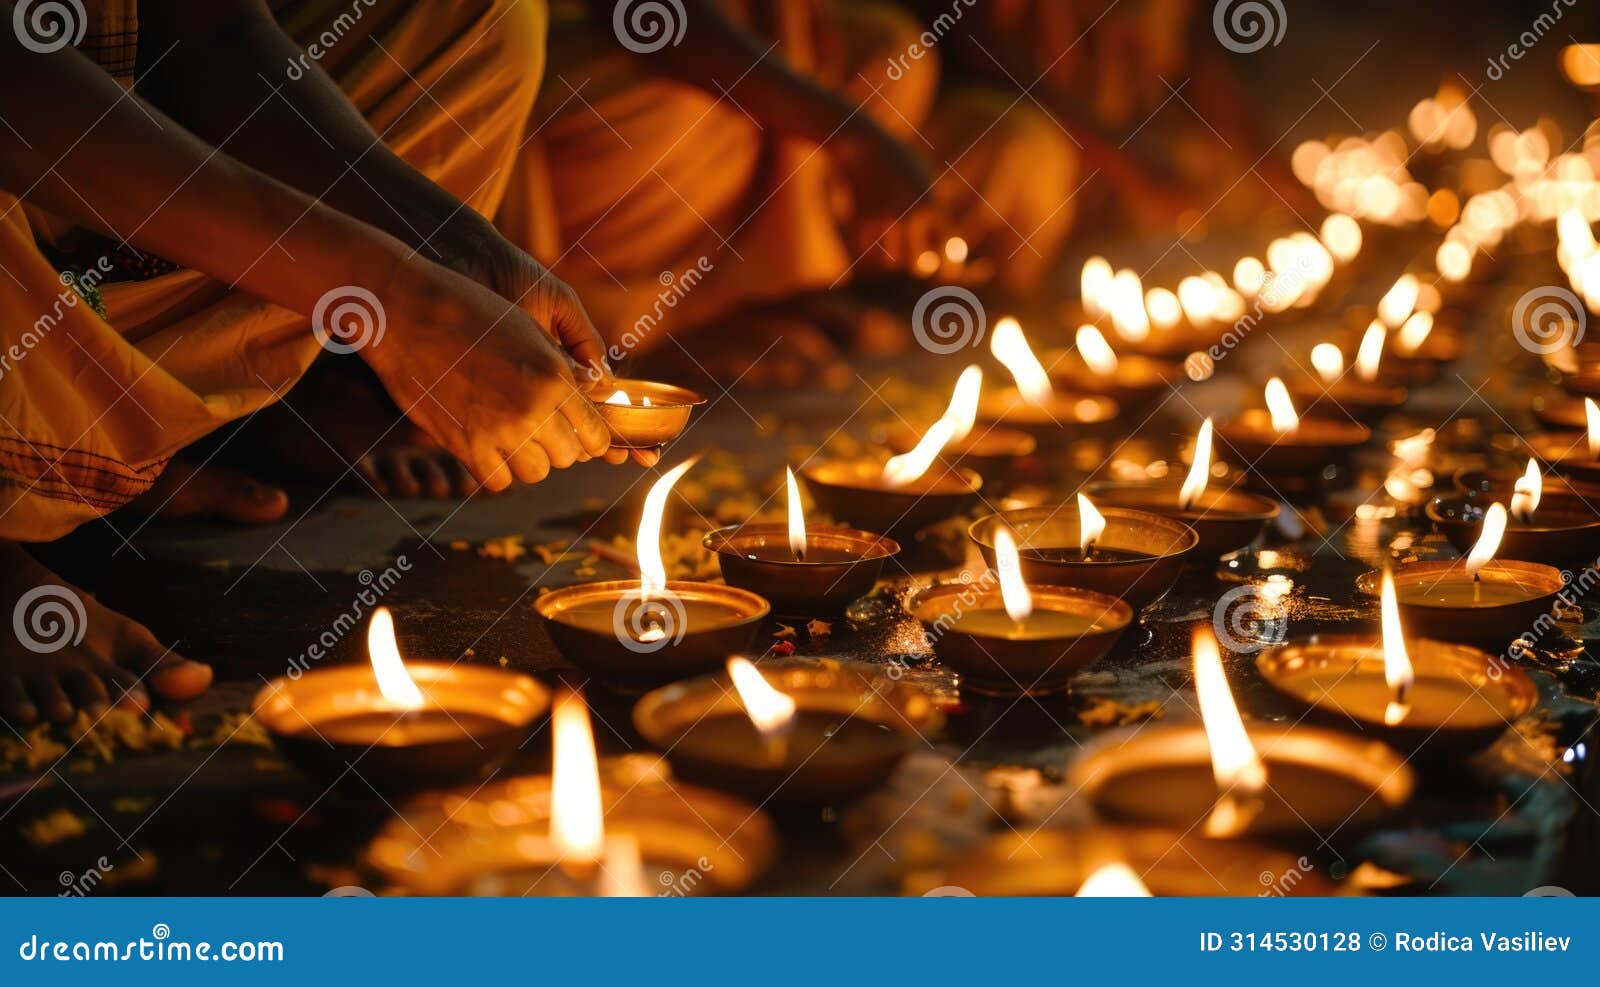 devotees lighting candles for vesak. in the warm glow of candlelight, devotees are seen lighting oil lamps during vesak